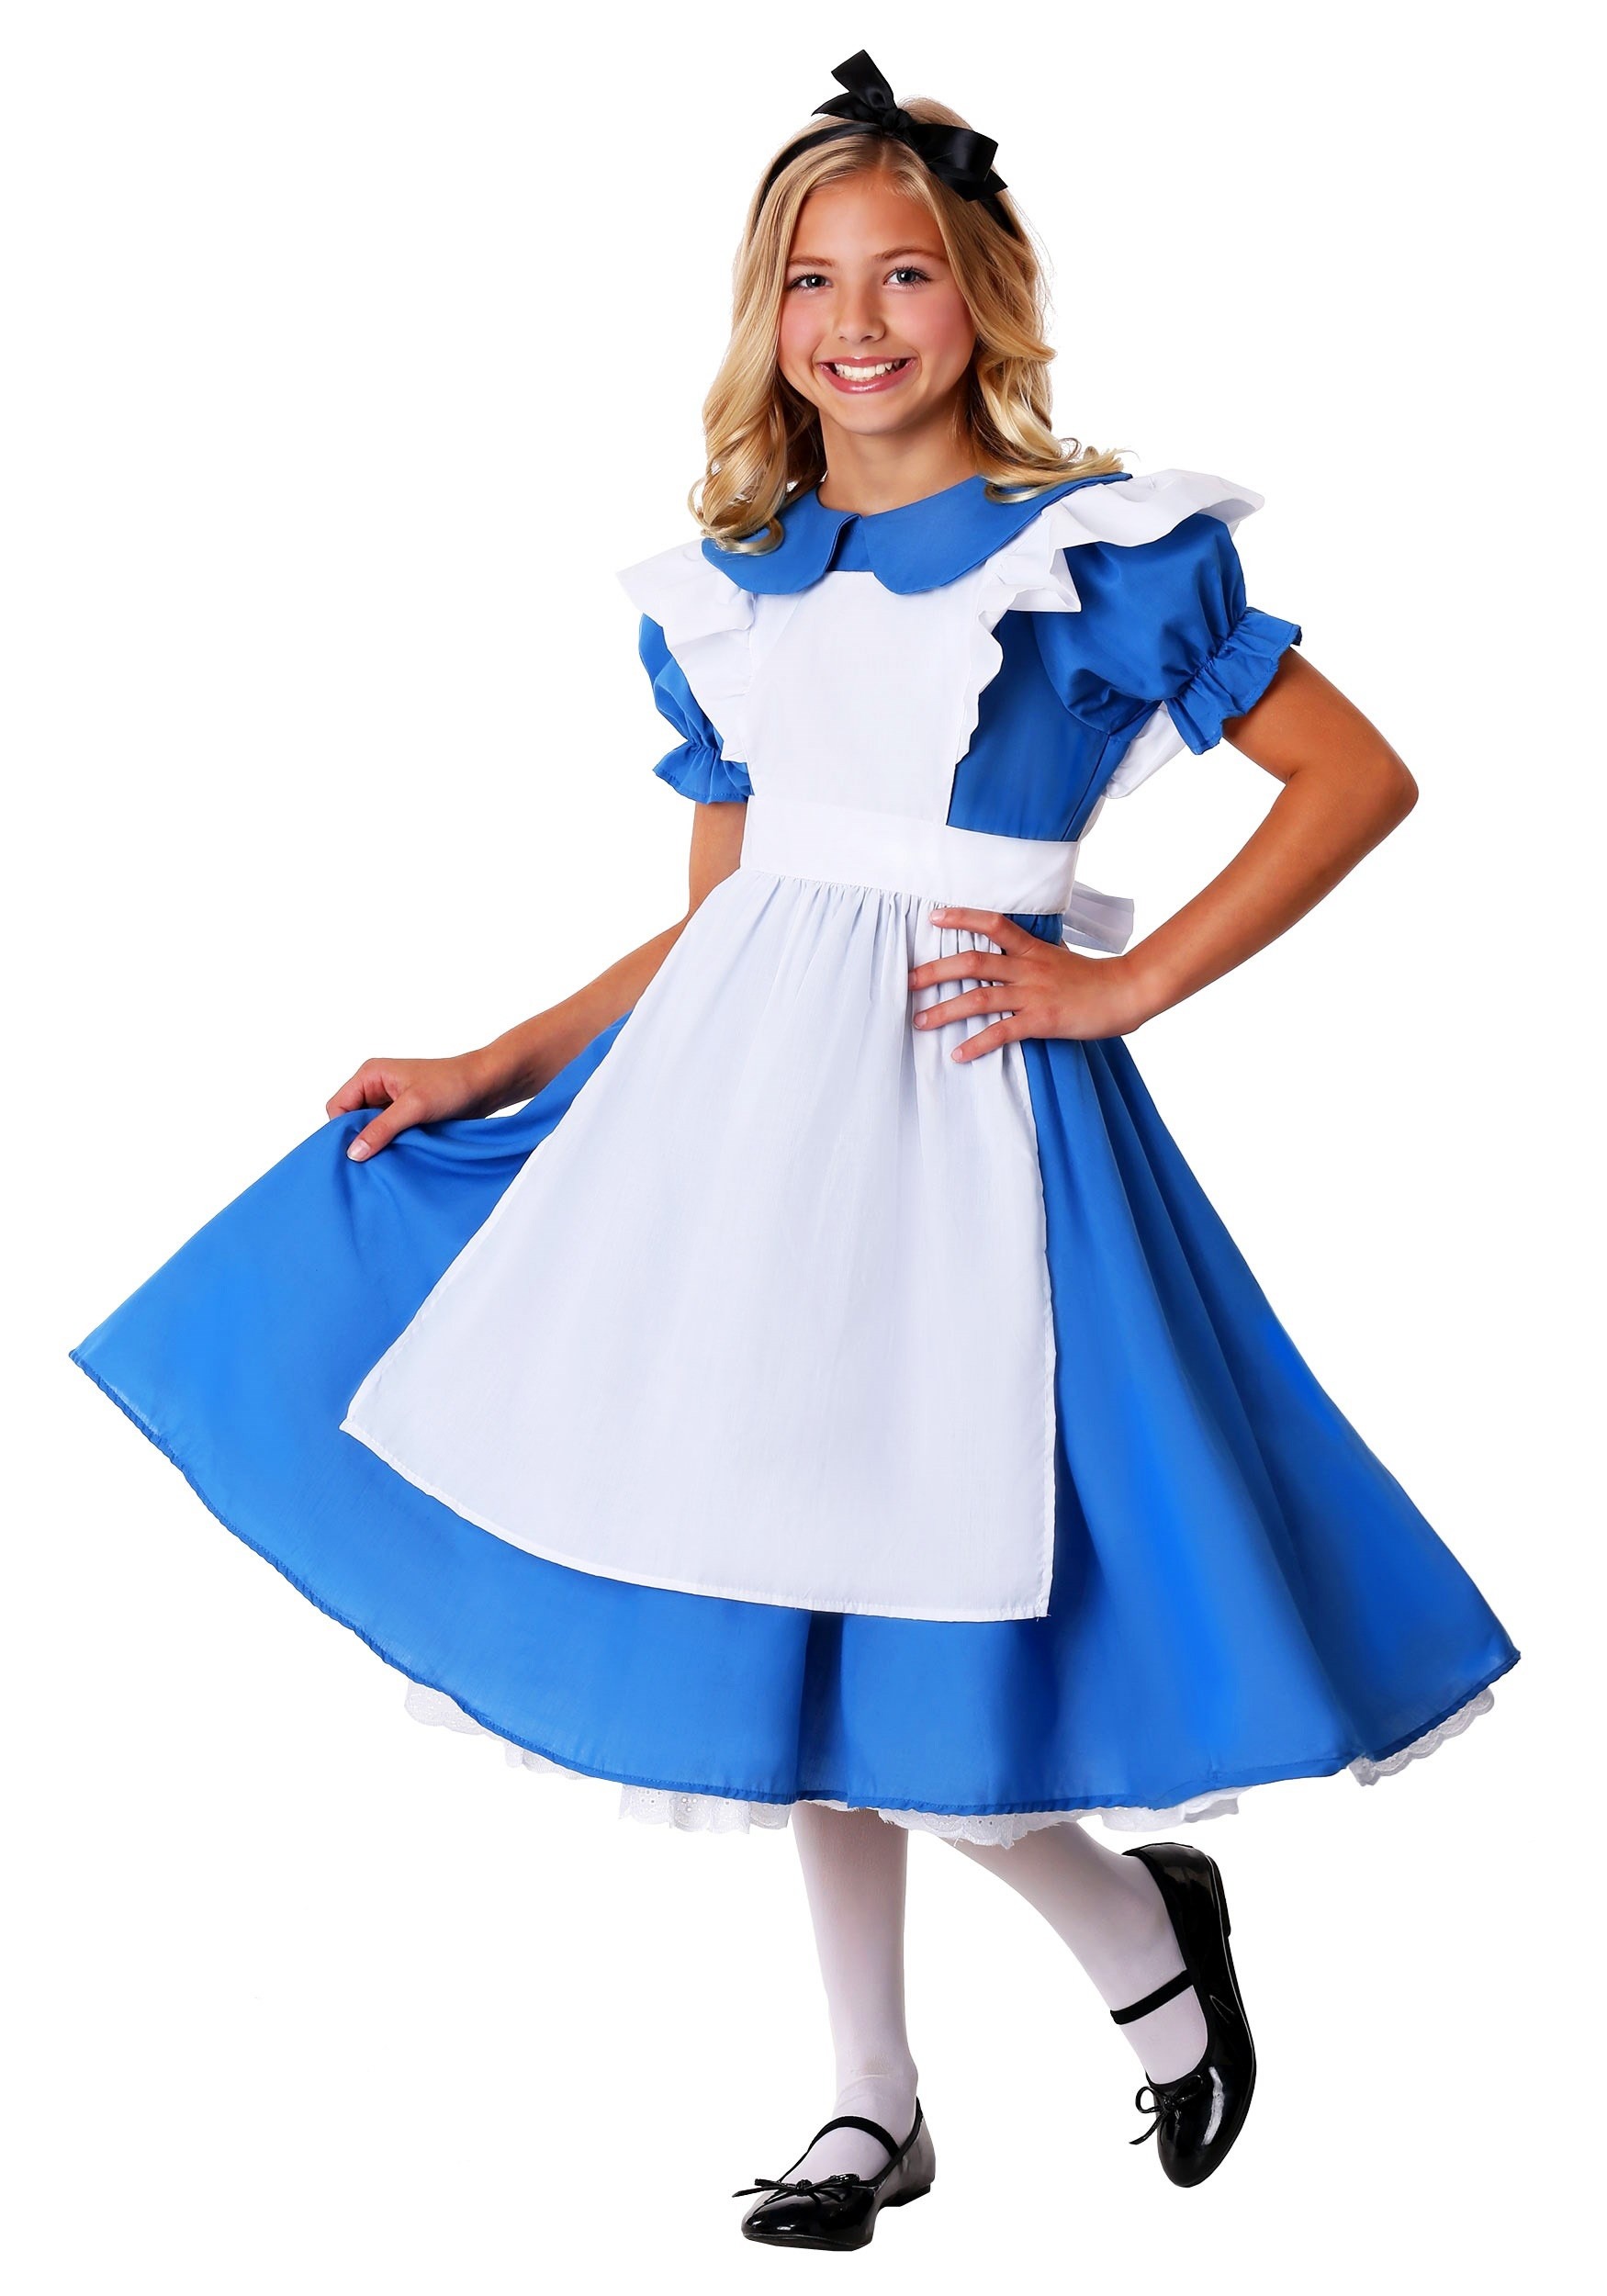 https://images.fun.com/products/4802/1-1/kids-deluxe-girls-alice-costume-update.jpg